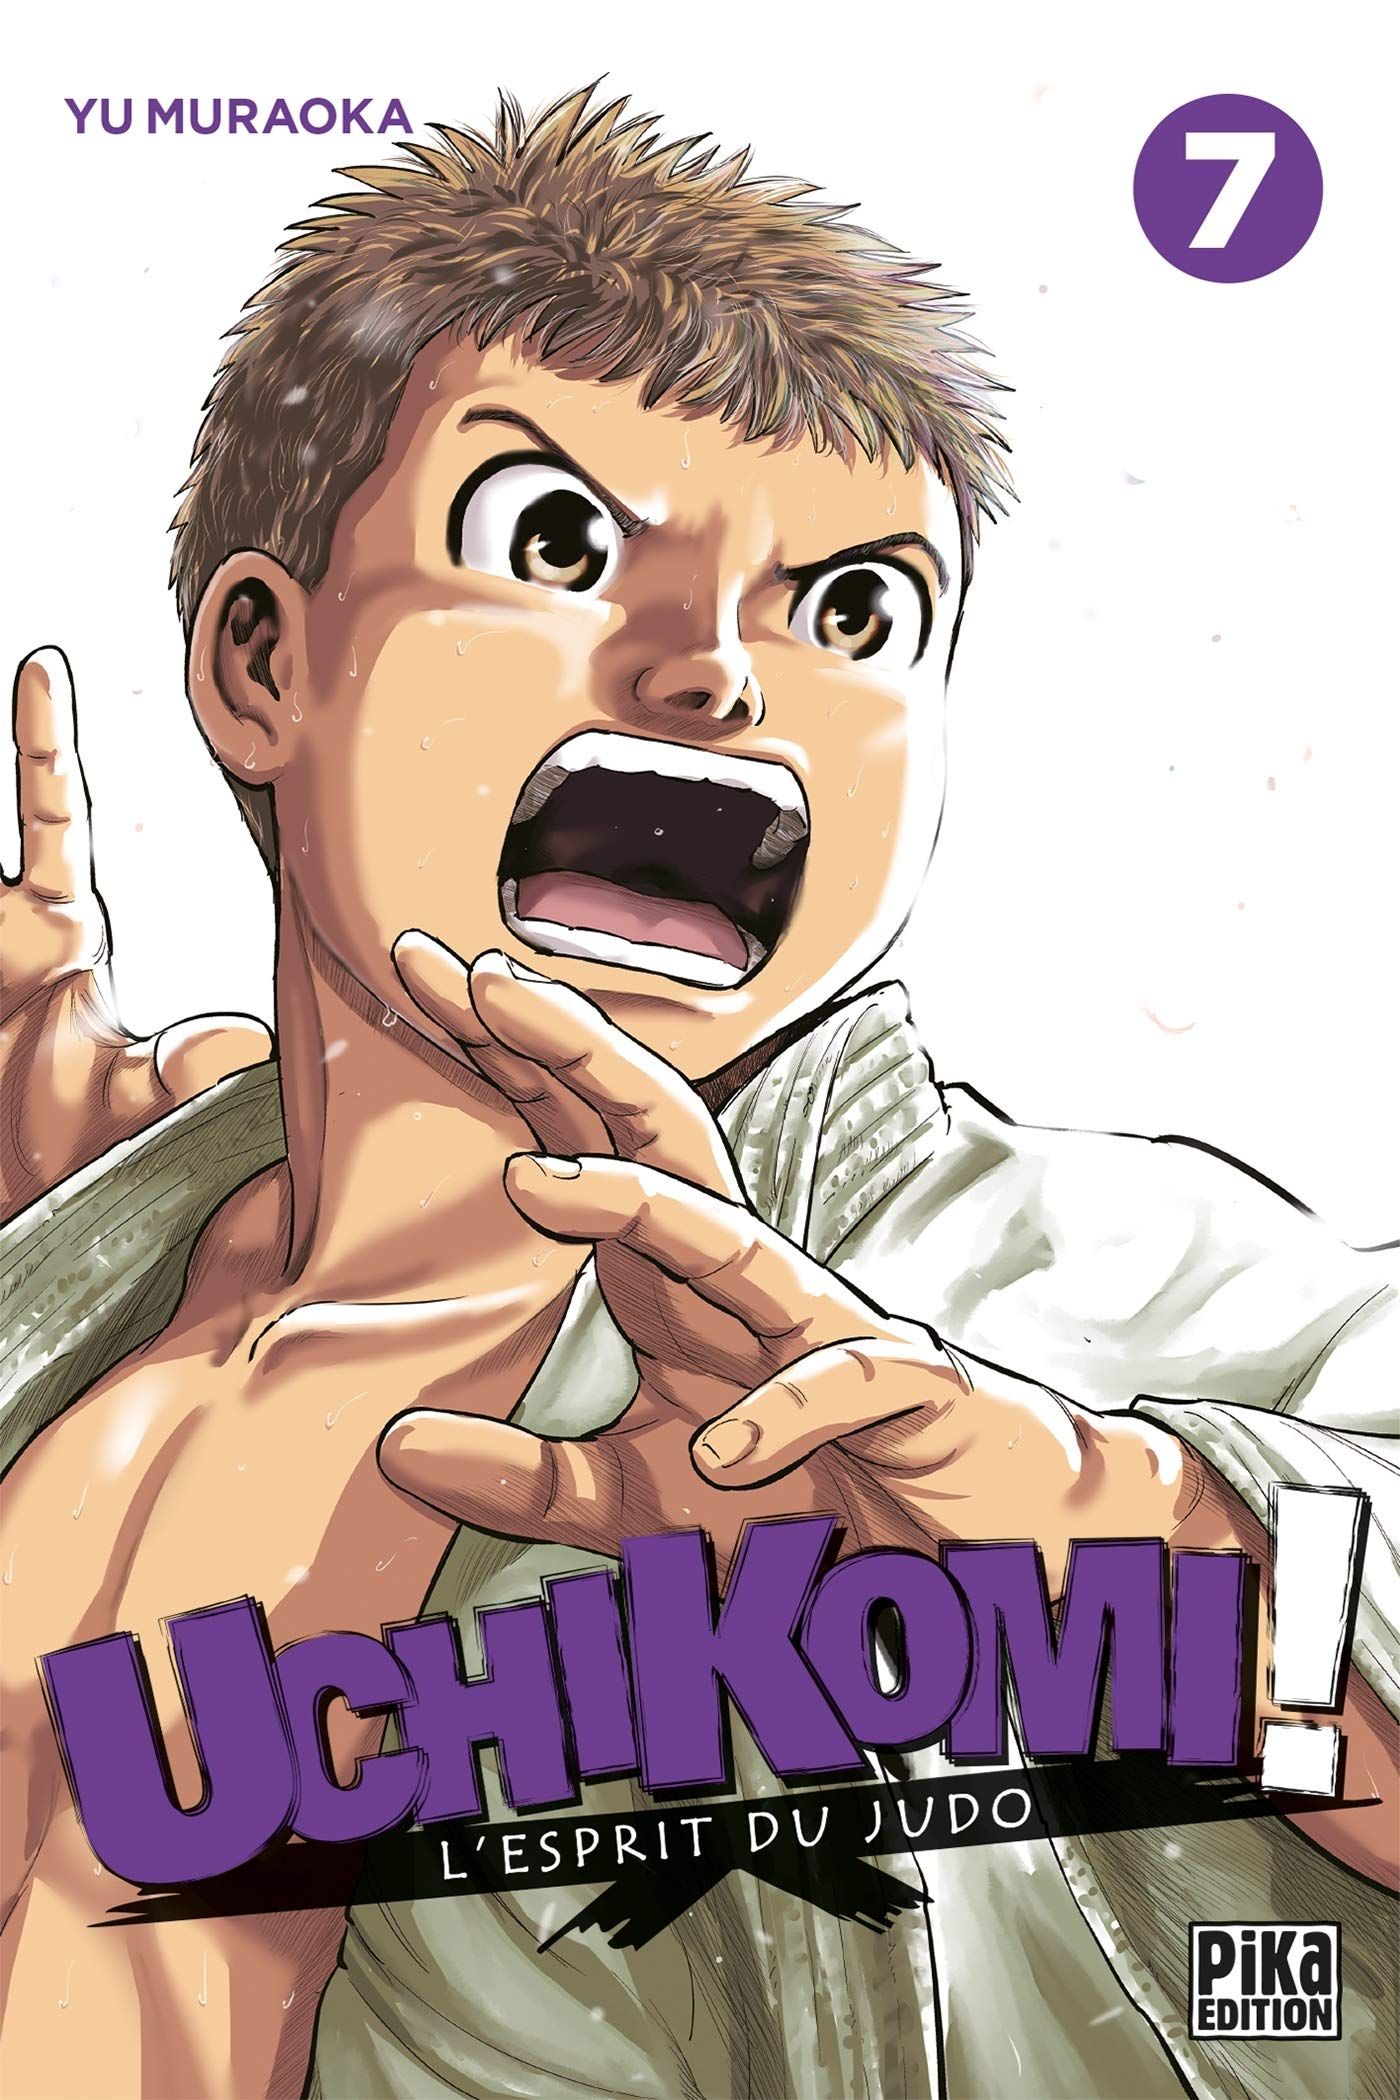 Uchikomi - l'Esprit du Judo Vol.7